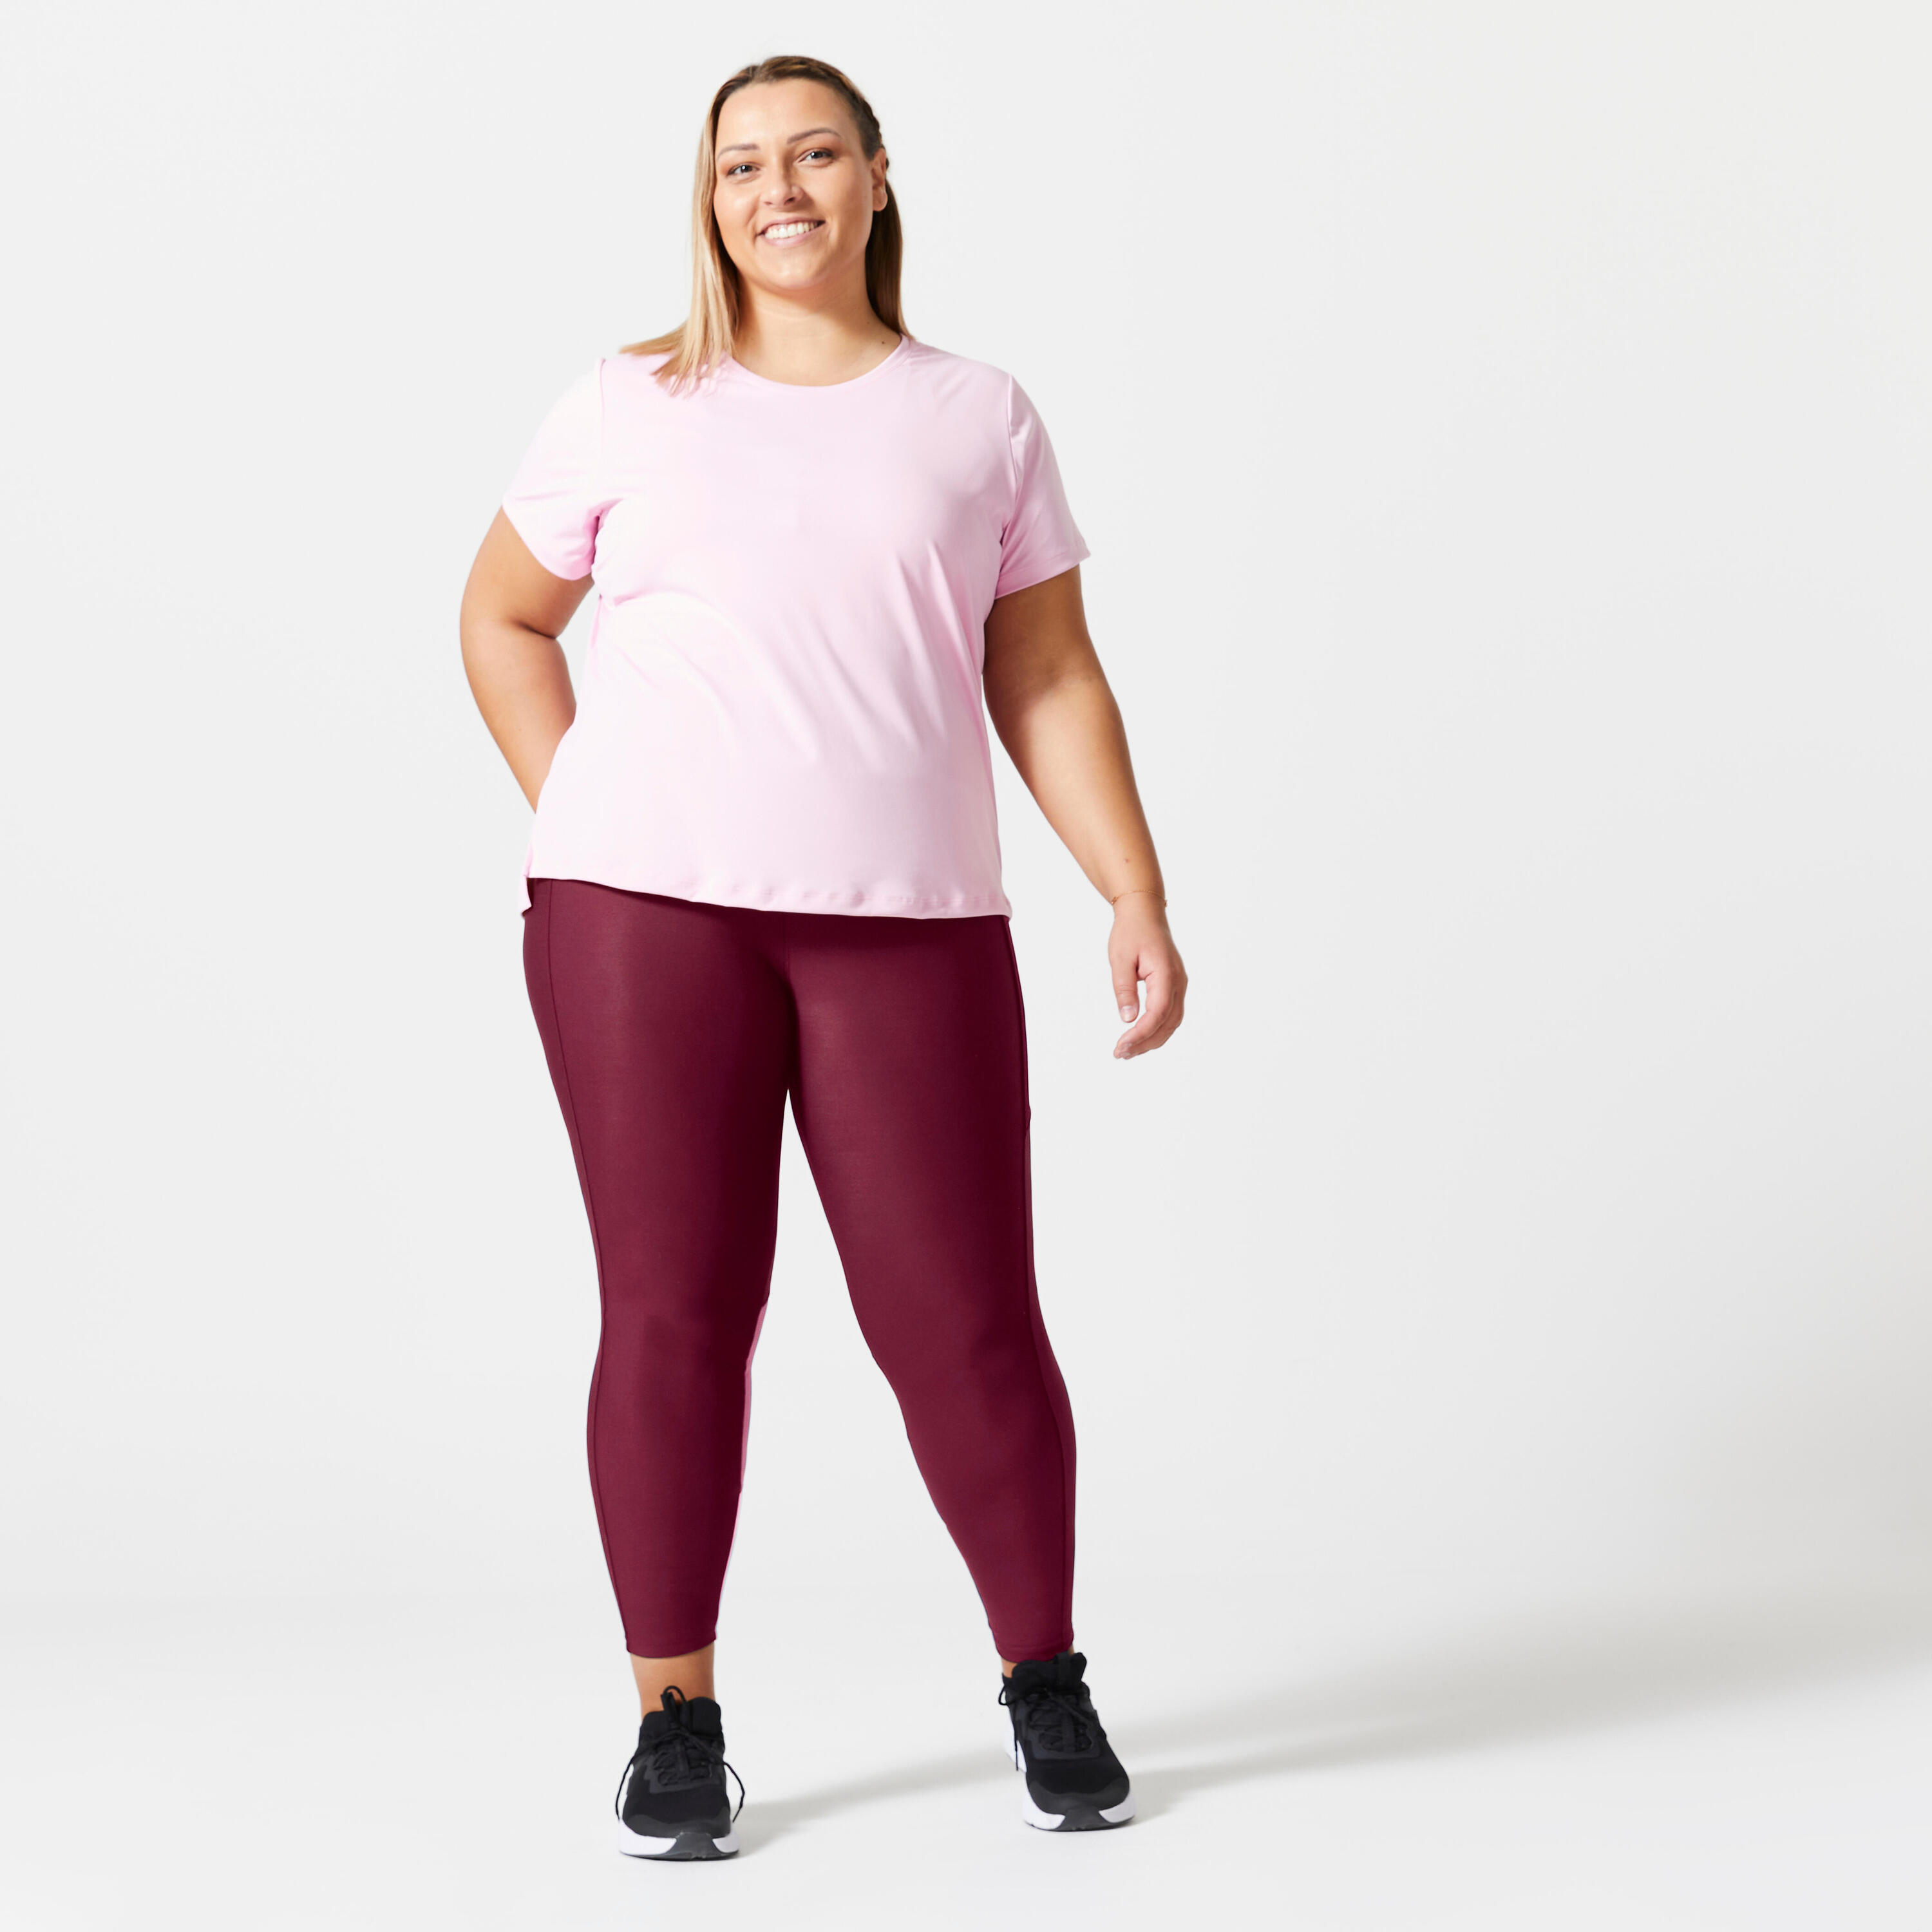 Women's Cardio Fitness Short-Sleeved Plus Size T-Shirt - Light Pink 2/5